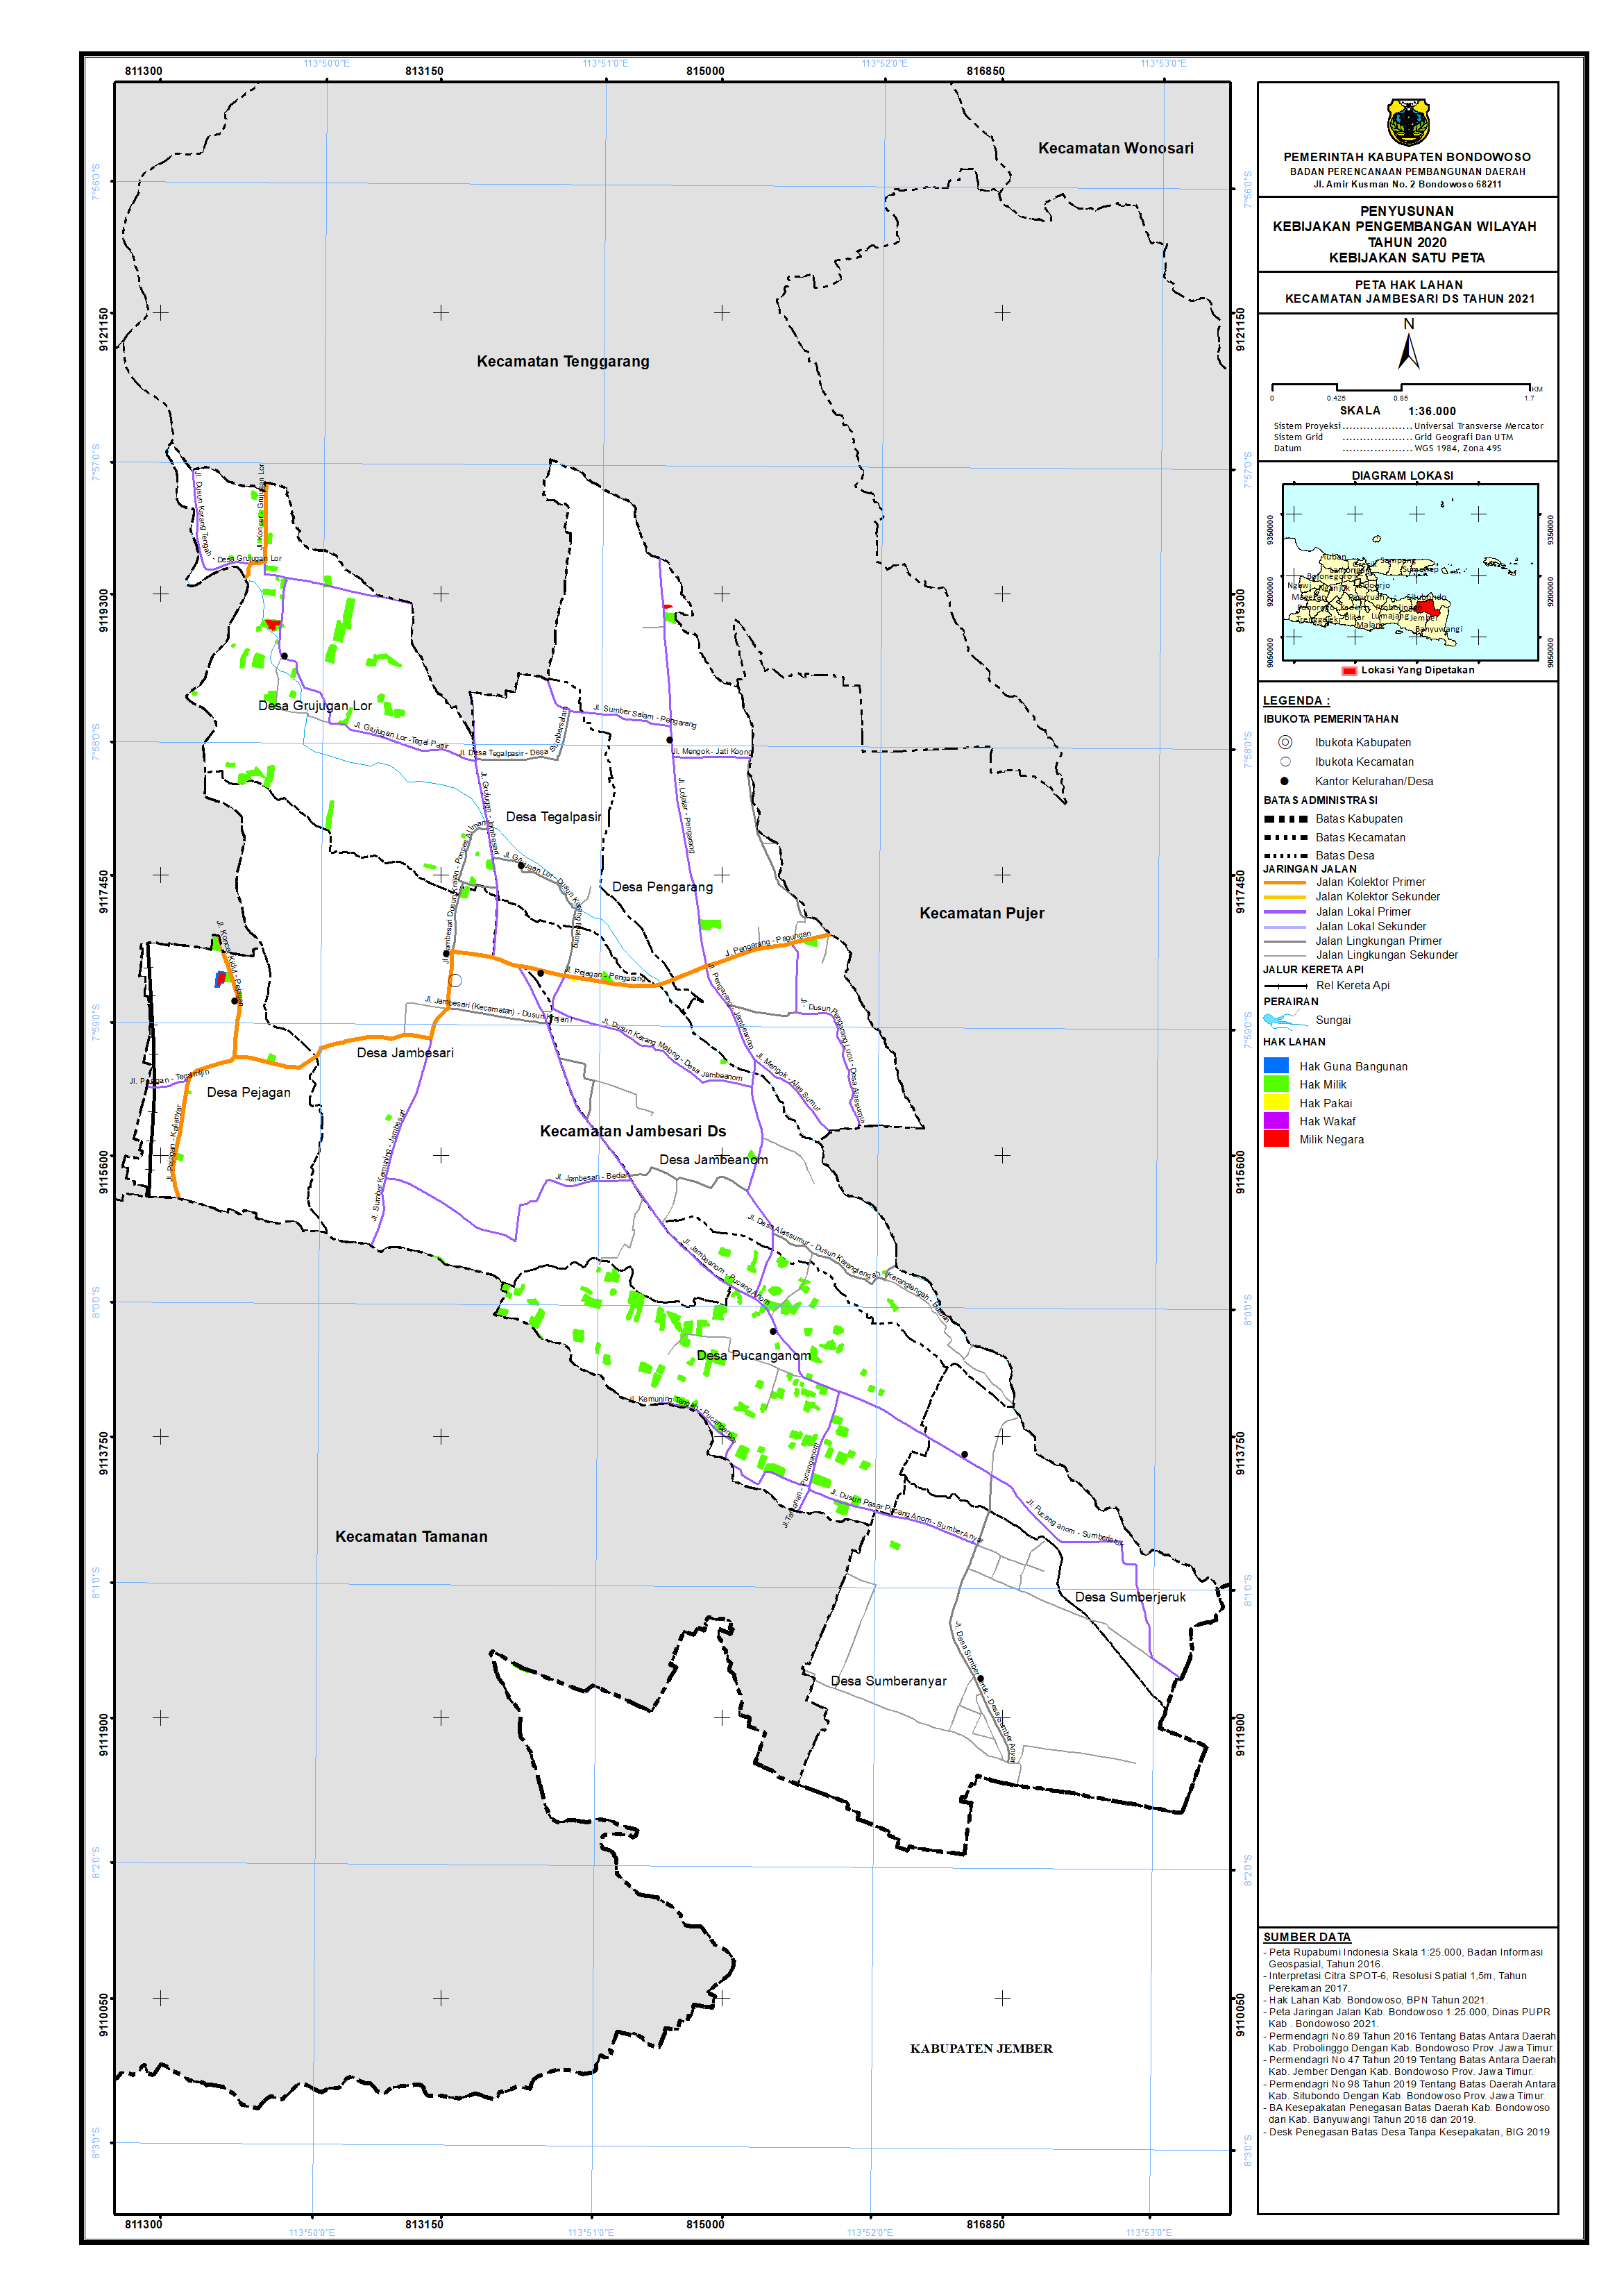 Peta Hak Lahan Kecamatan Jambesari DS.png